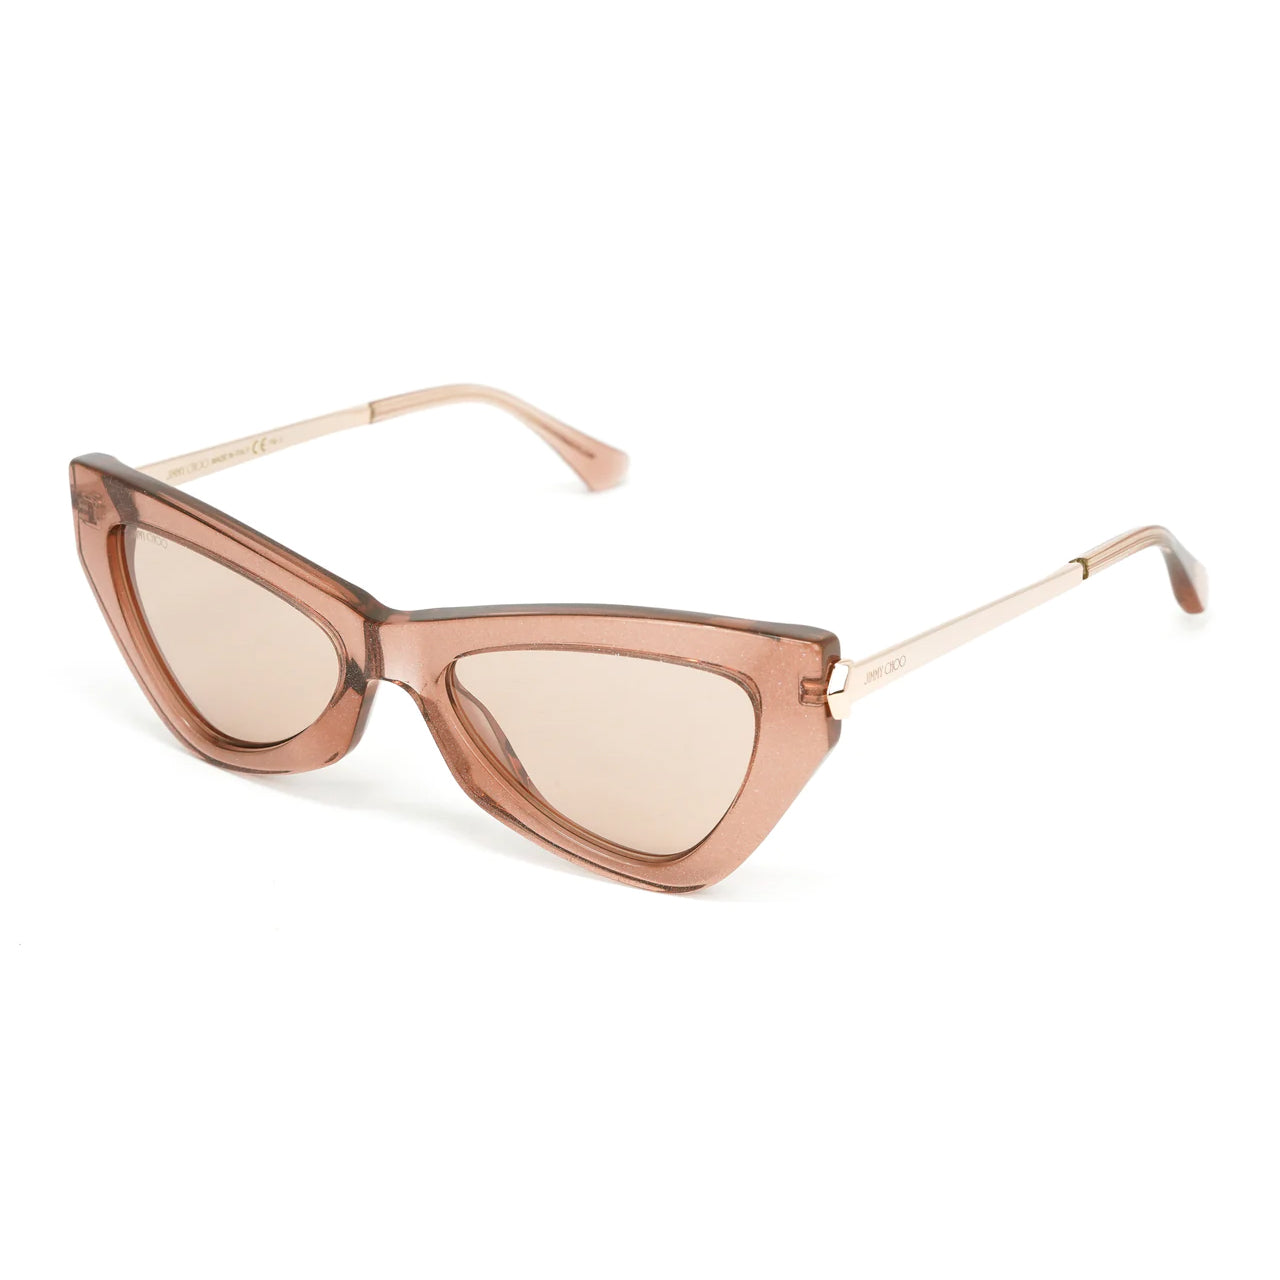 Jimmy Choo Women's Sunglasses Angular Cat Eye Pink DONNA/S W66